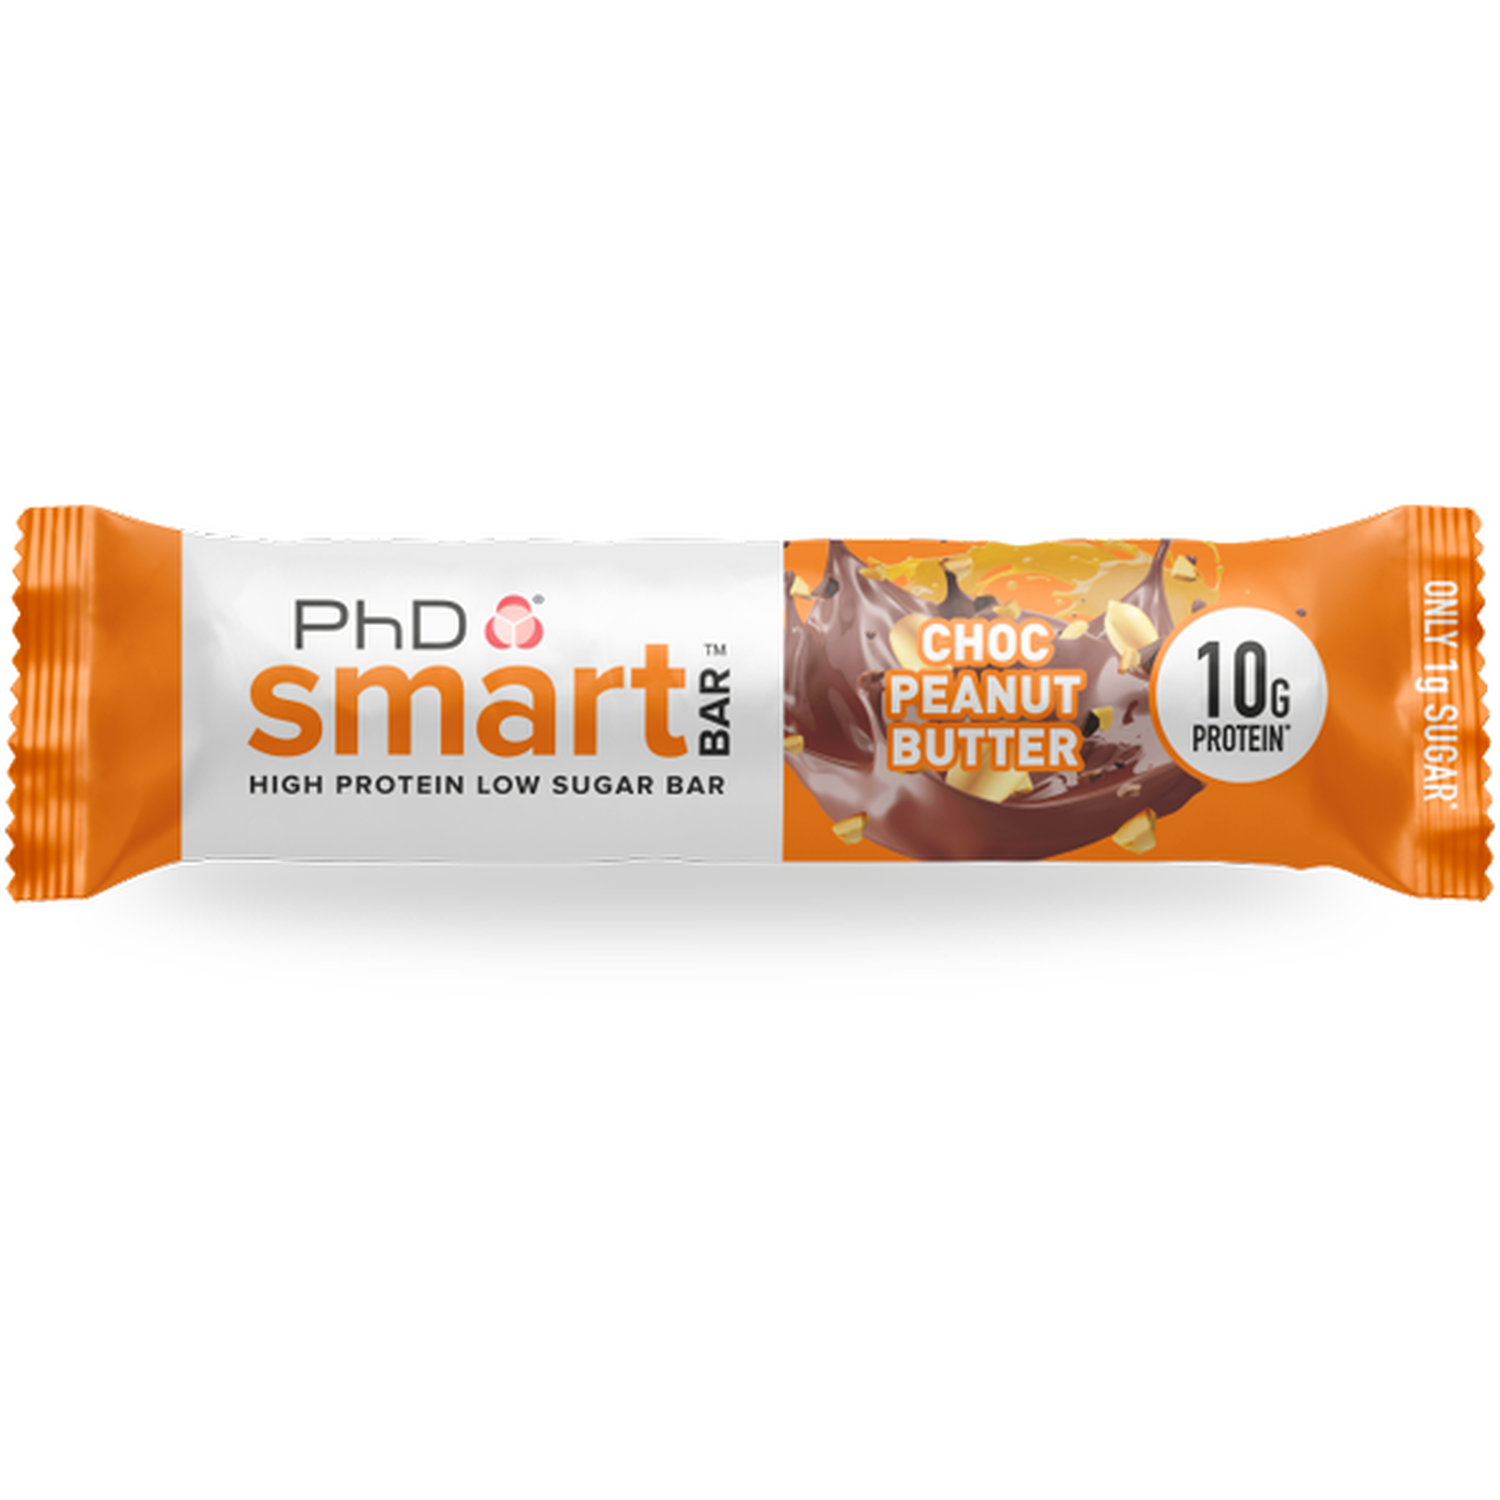 PhD Smart Bar Mini Choc Peanut Butter Image